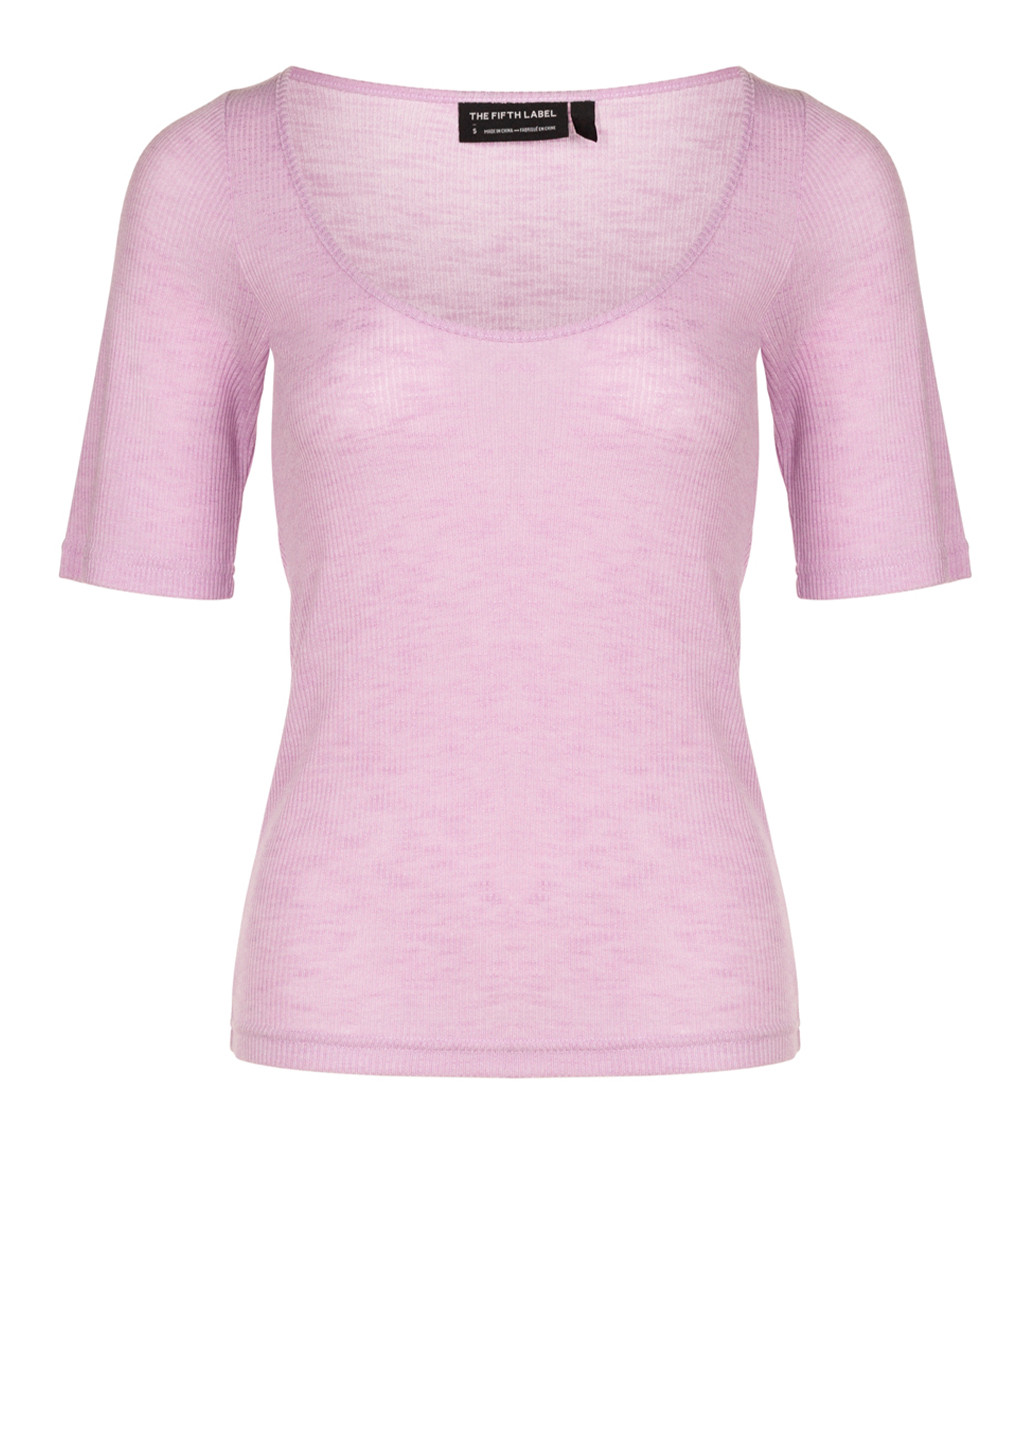 Сиреневая летняя женская сиреневая футболка с коротким рукавом The Fifth Label